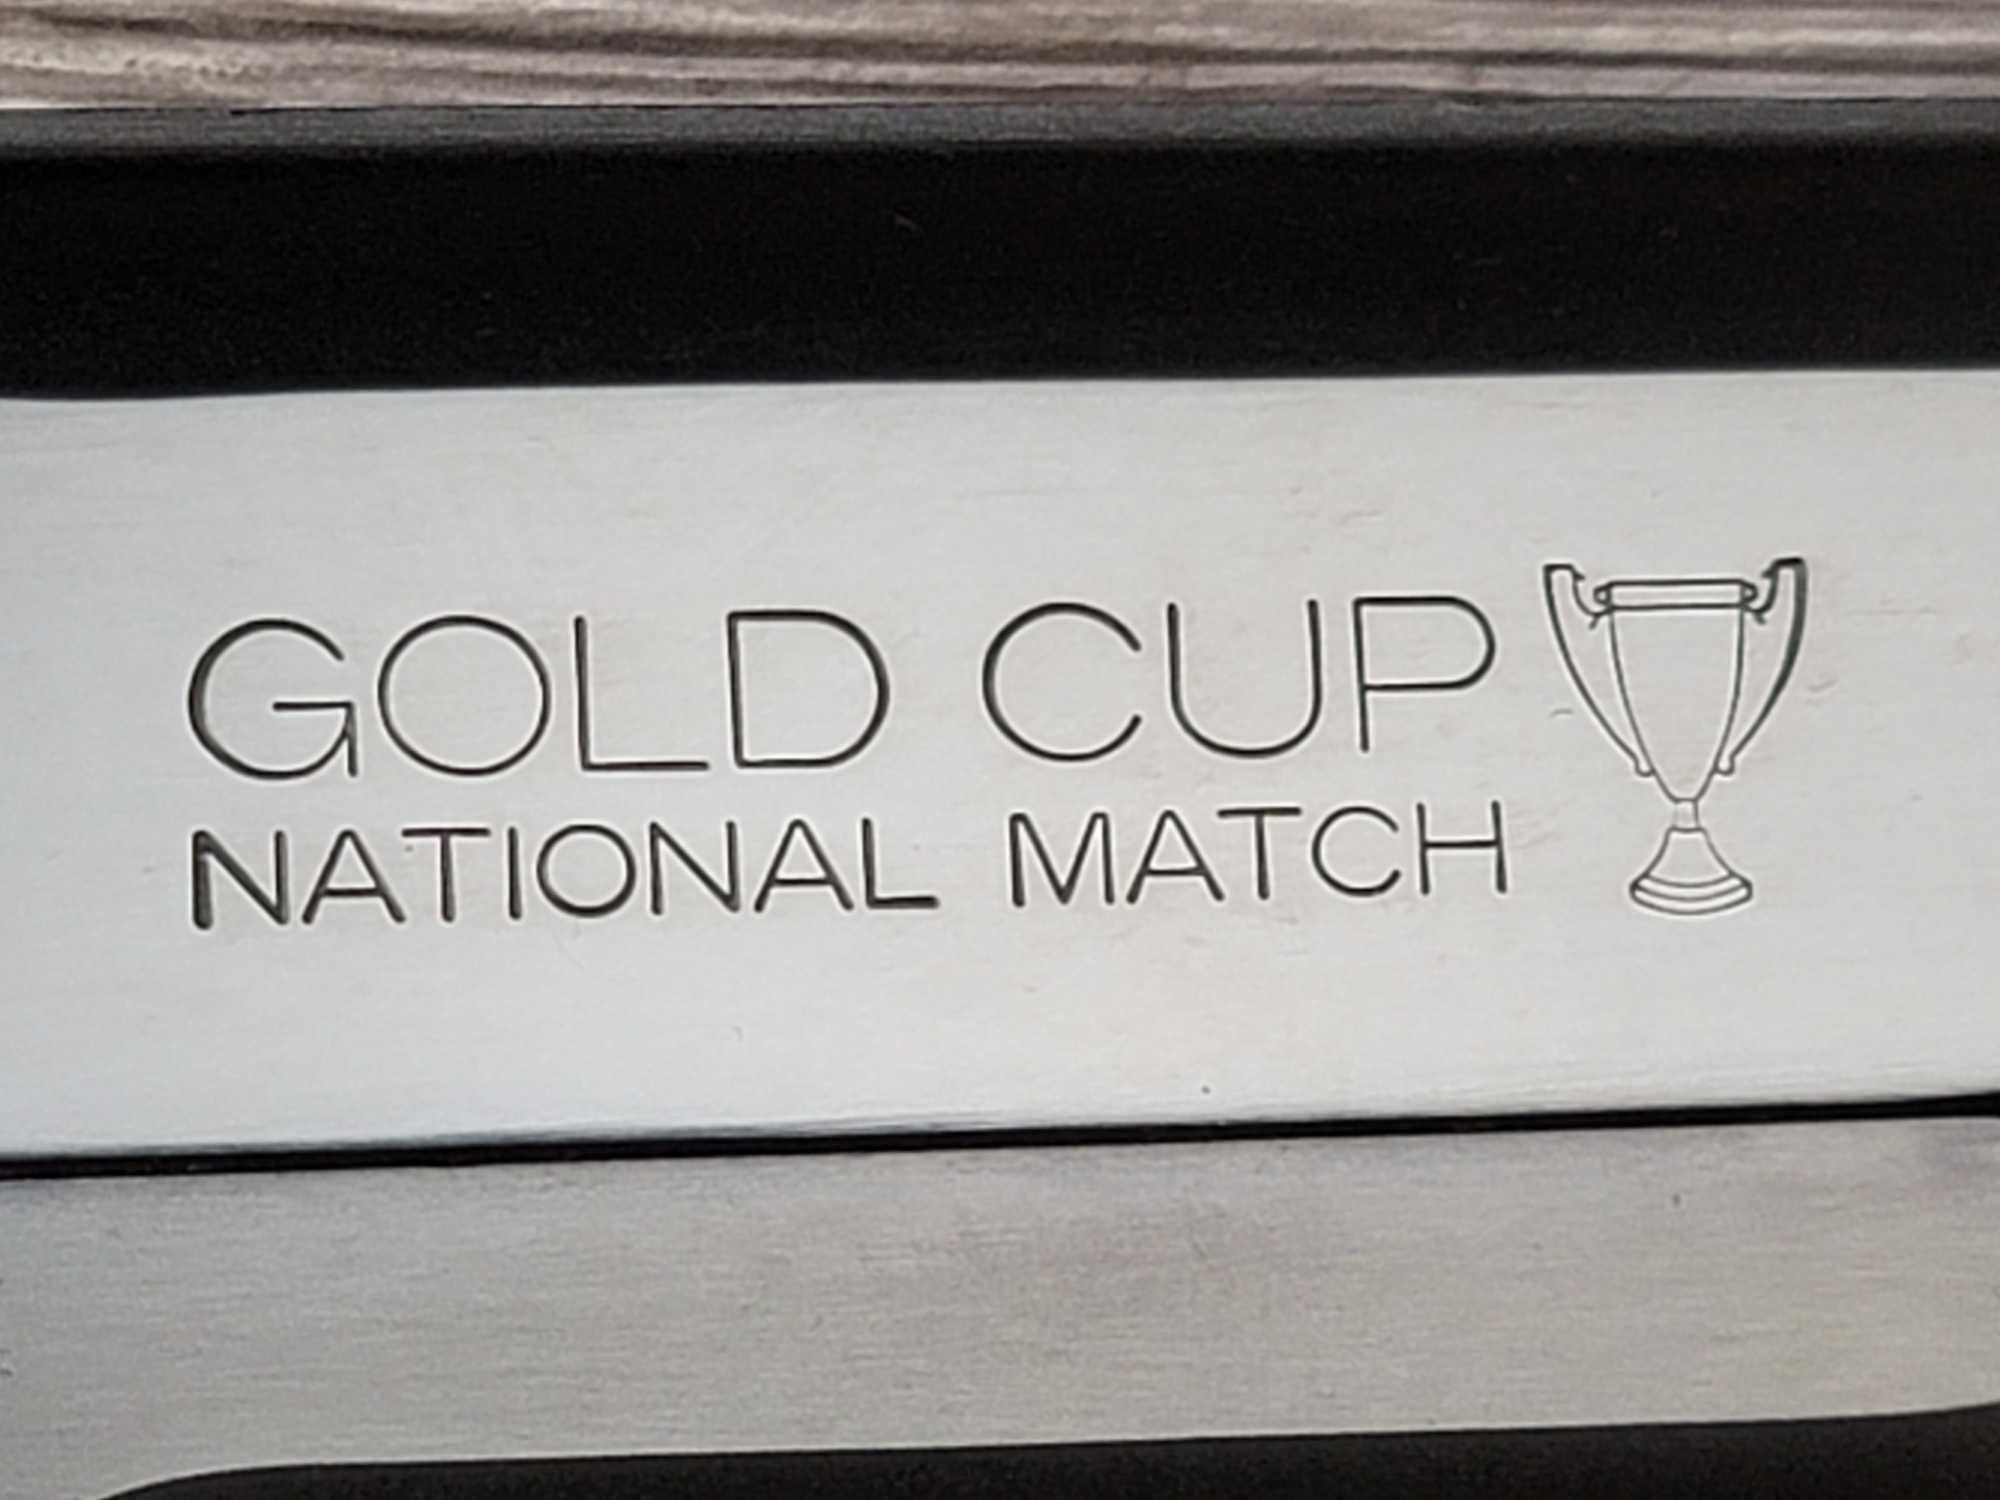 COLT MK IV SERIES 70 GOLD CUP NATIONA MATCH PISTOL .45ACP CALIBER.